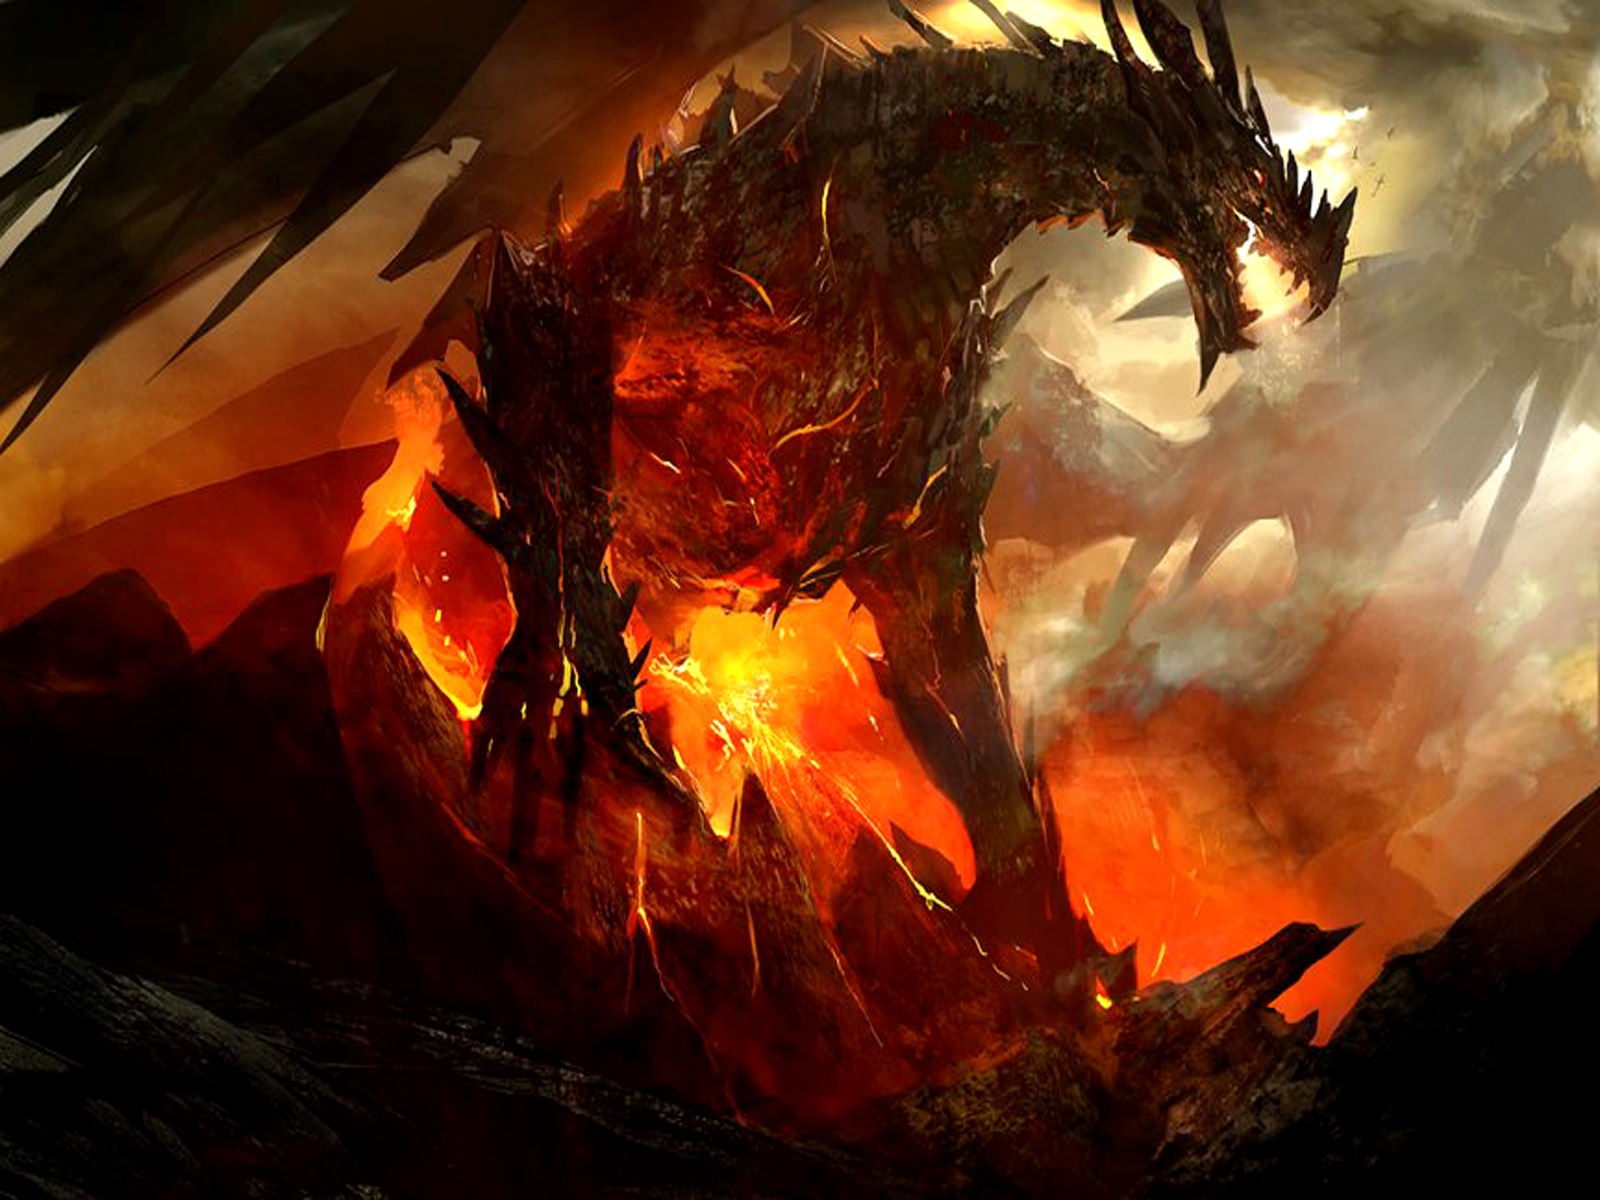  dragon background image dragon desktop wallpapers dragon hd wallpapers 1600x1200